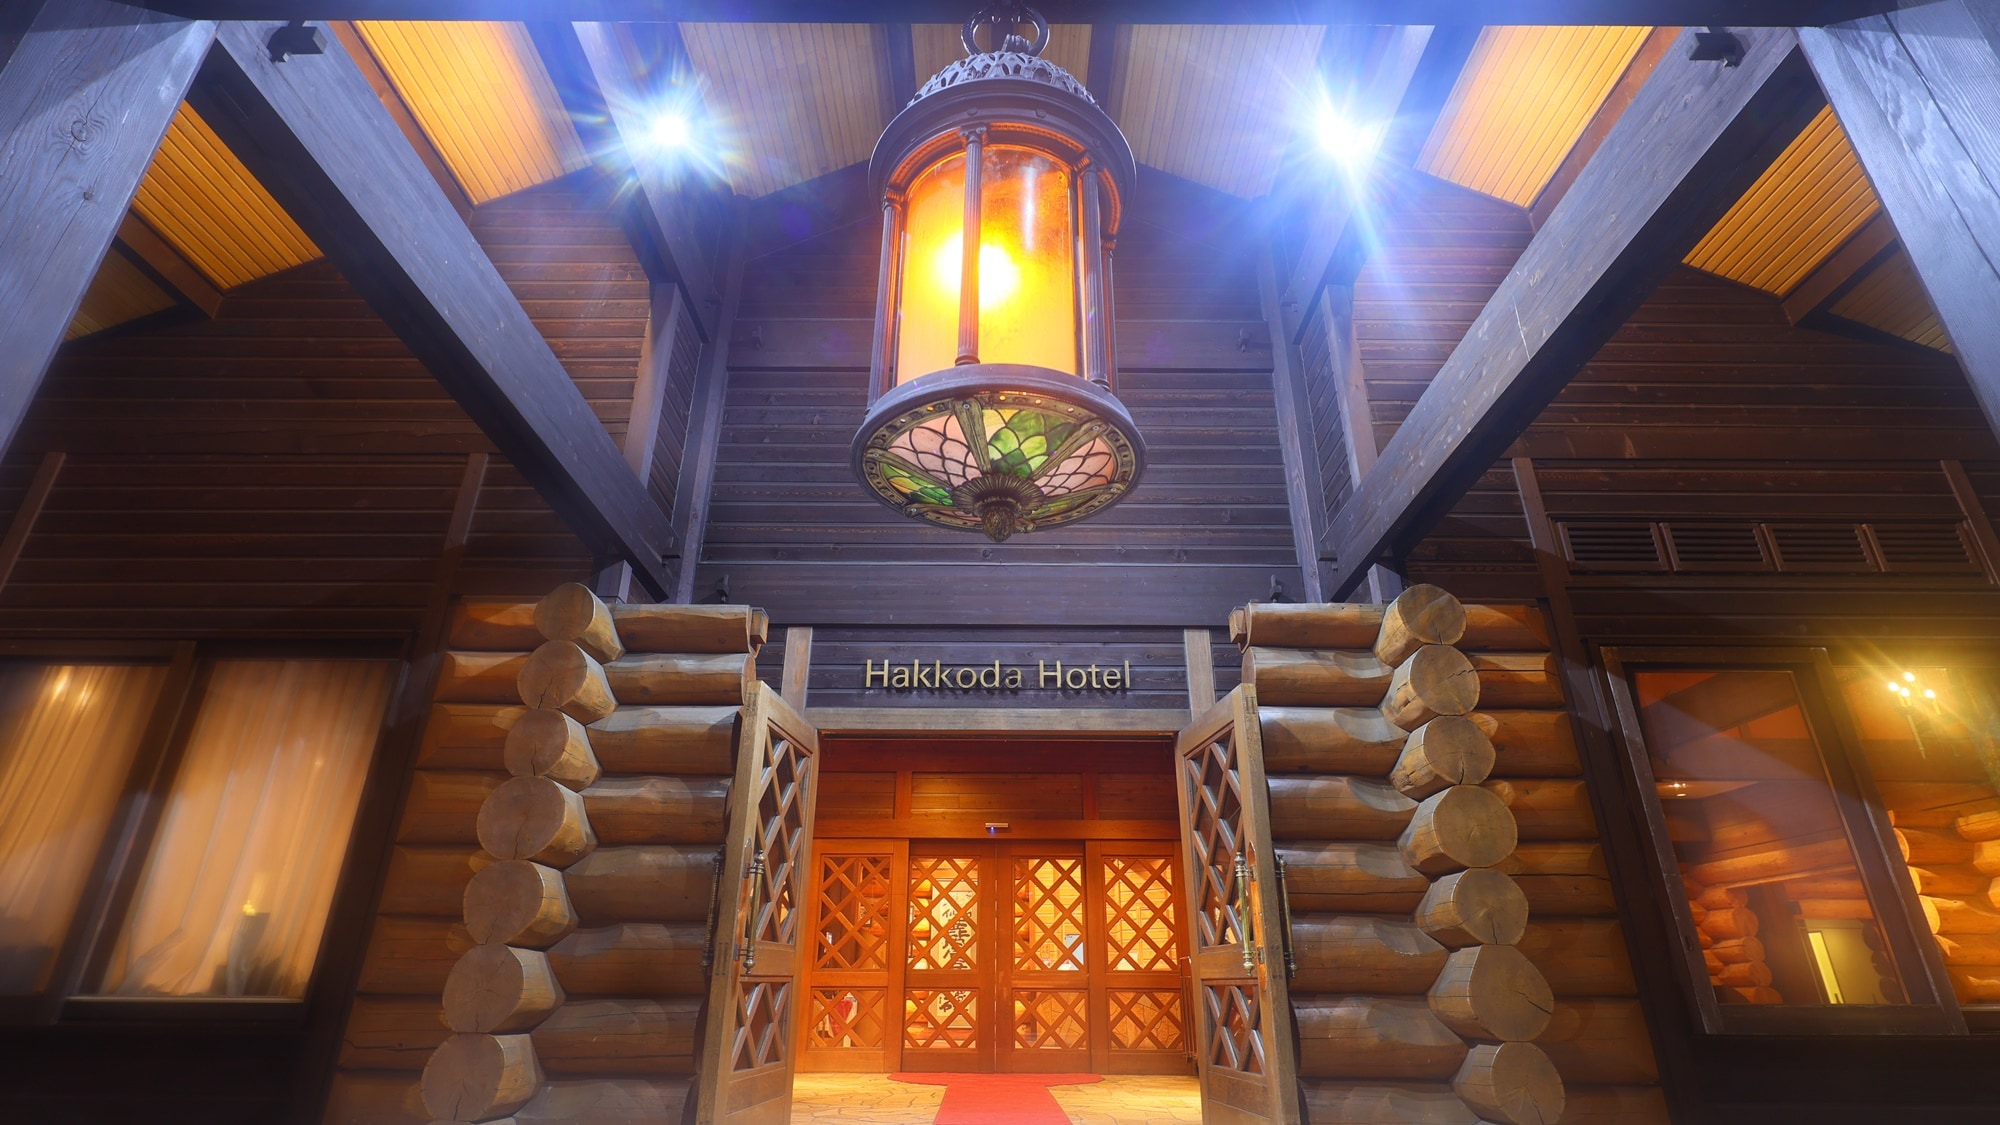 [Entrance] Welcome to Hakkoda Hotel